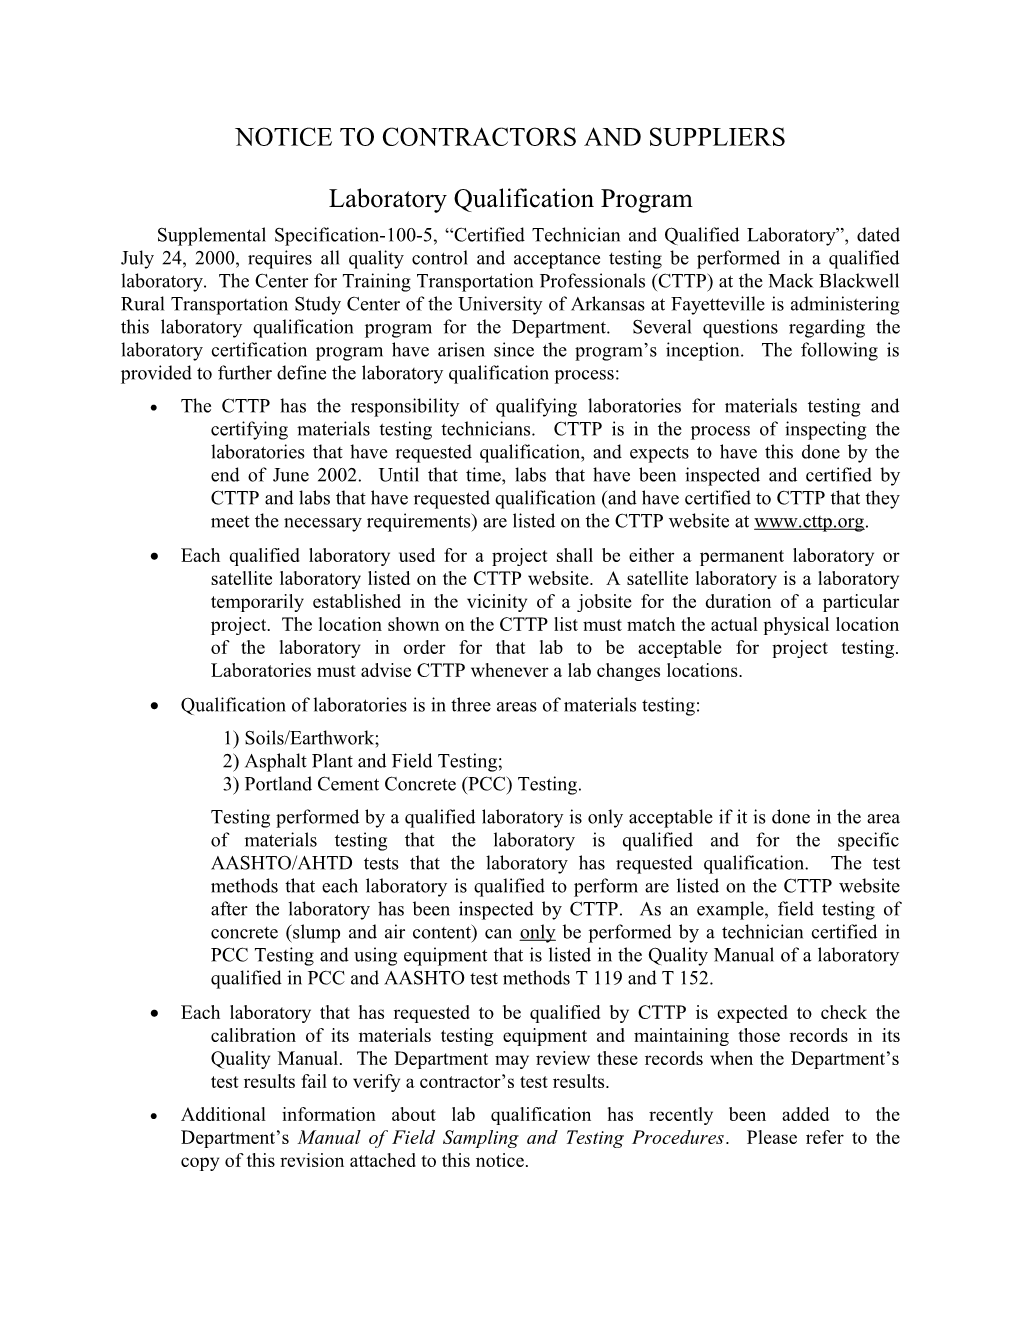 Laboratory Qualifiication Notice